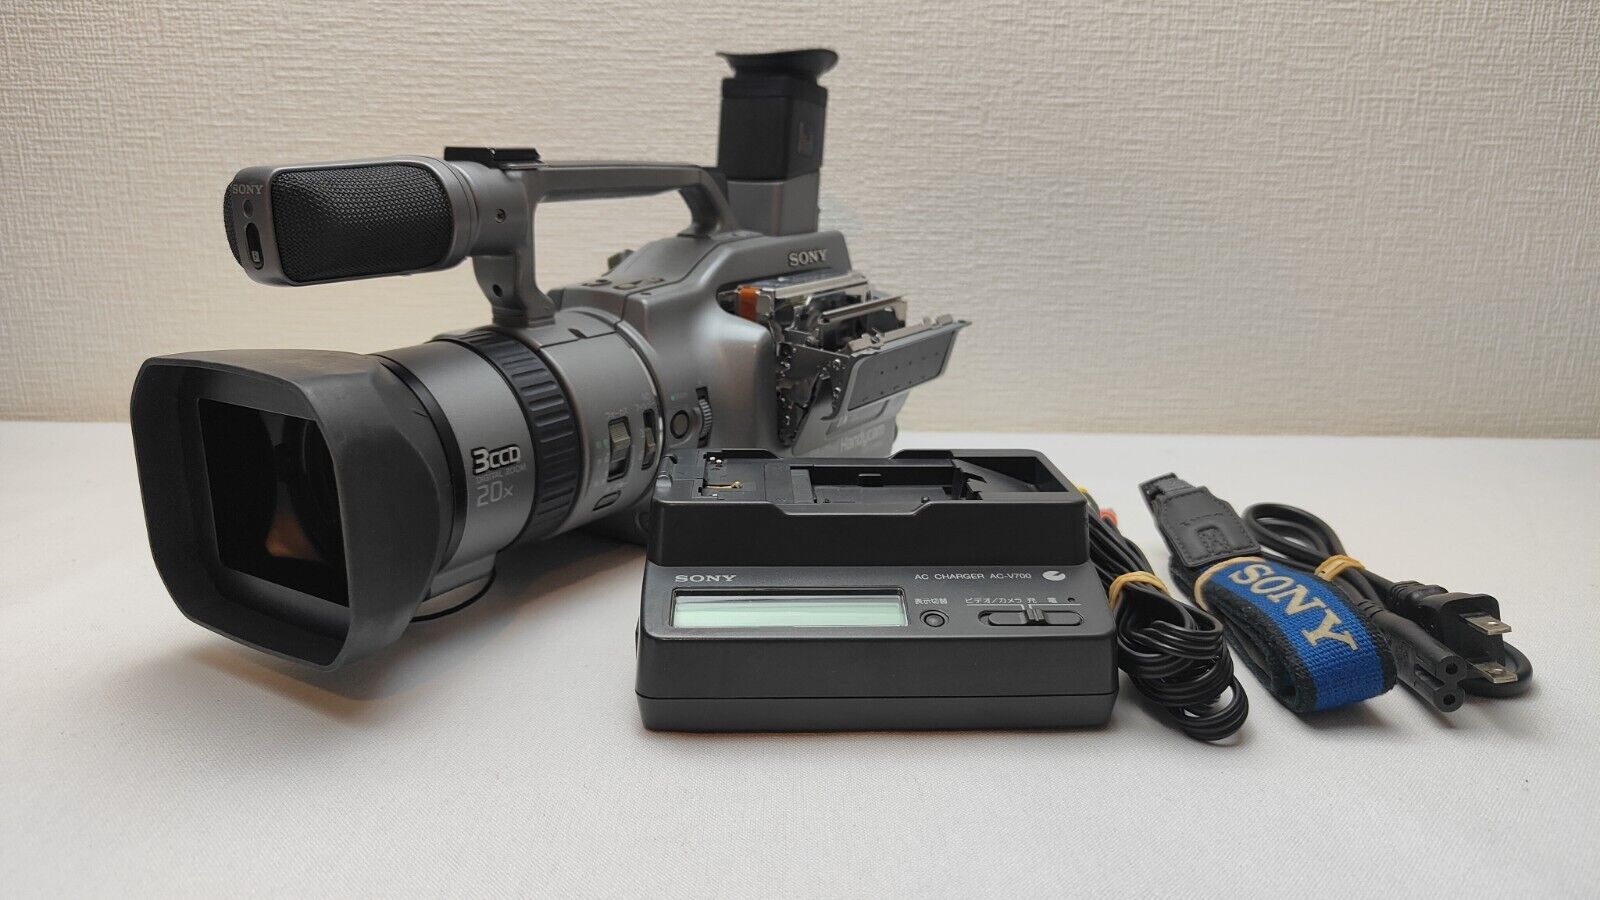 Sony DCR-VX1000 10x Optical Zoom LCD Digital Handycam - Gray Japanese 0427